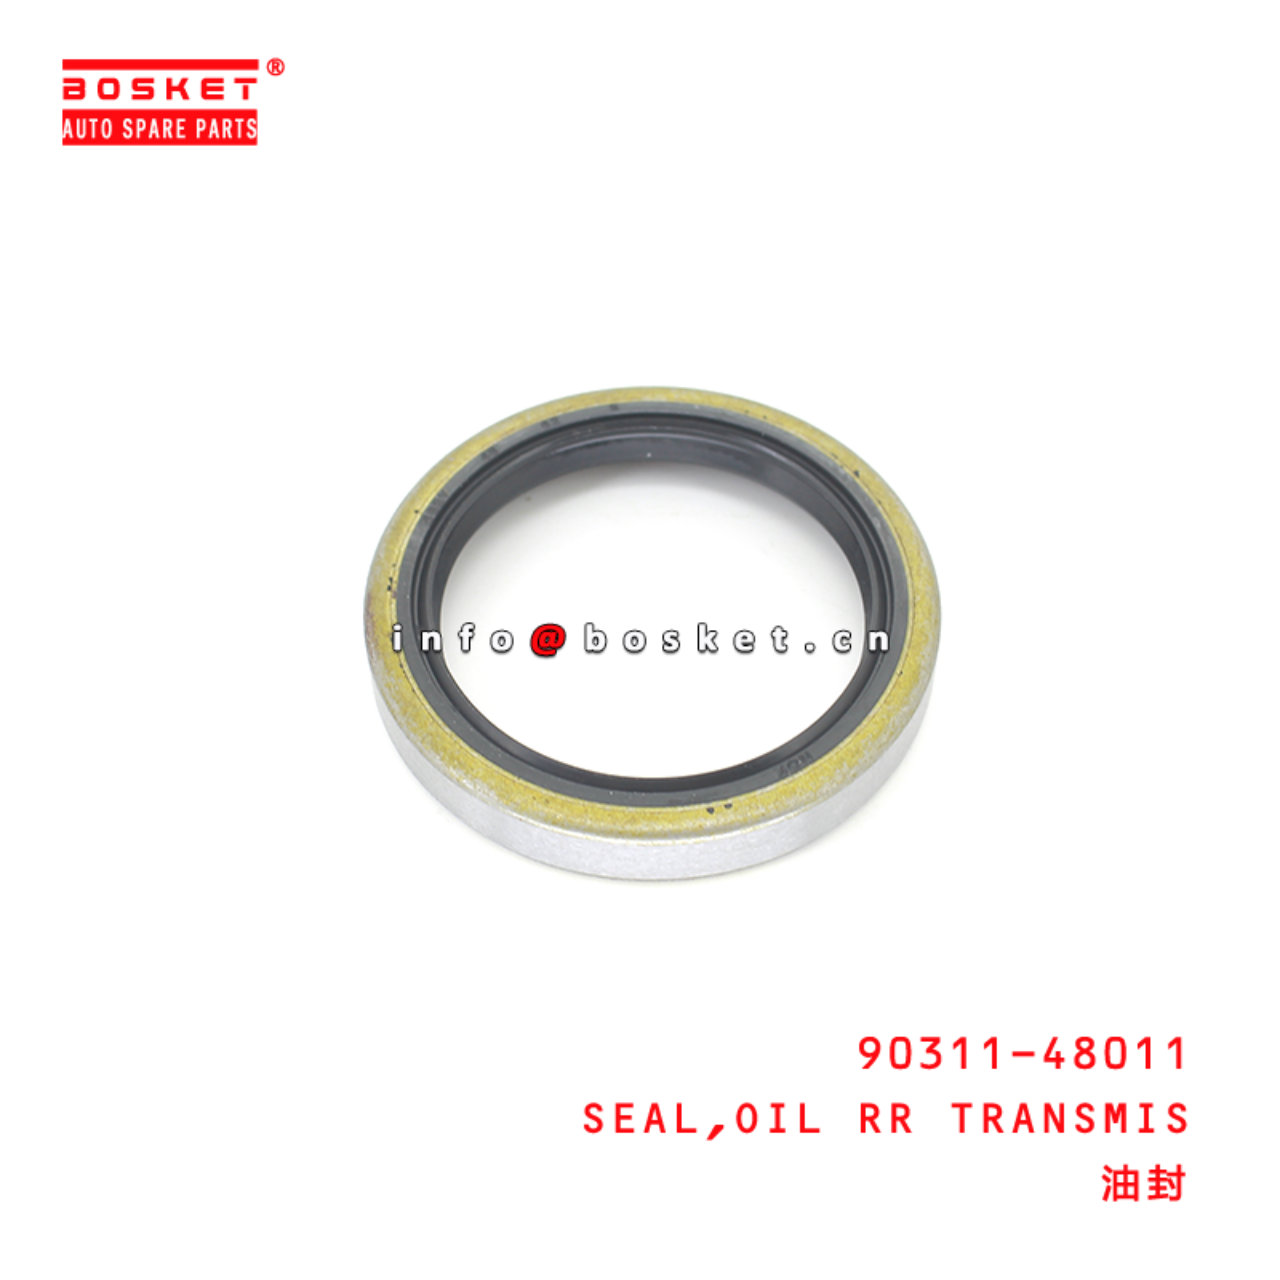 90311-48011 Oil Rear Transmis Seal Suitable for ISUZU TOYOTA